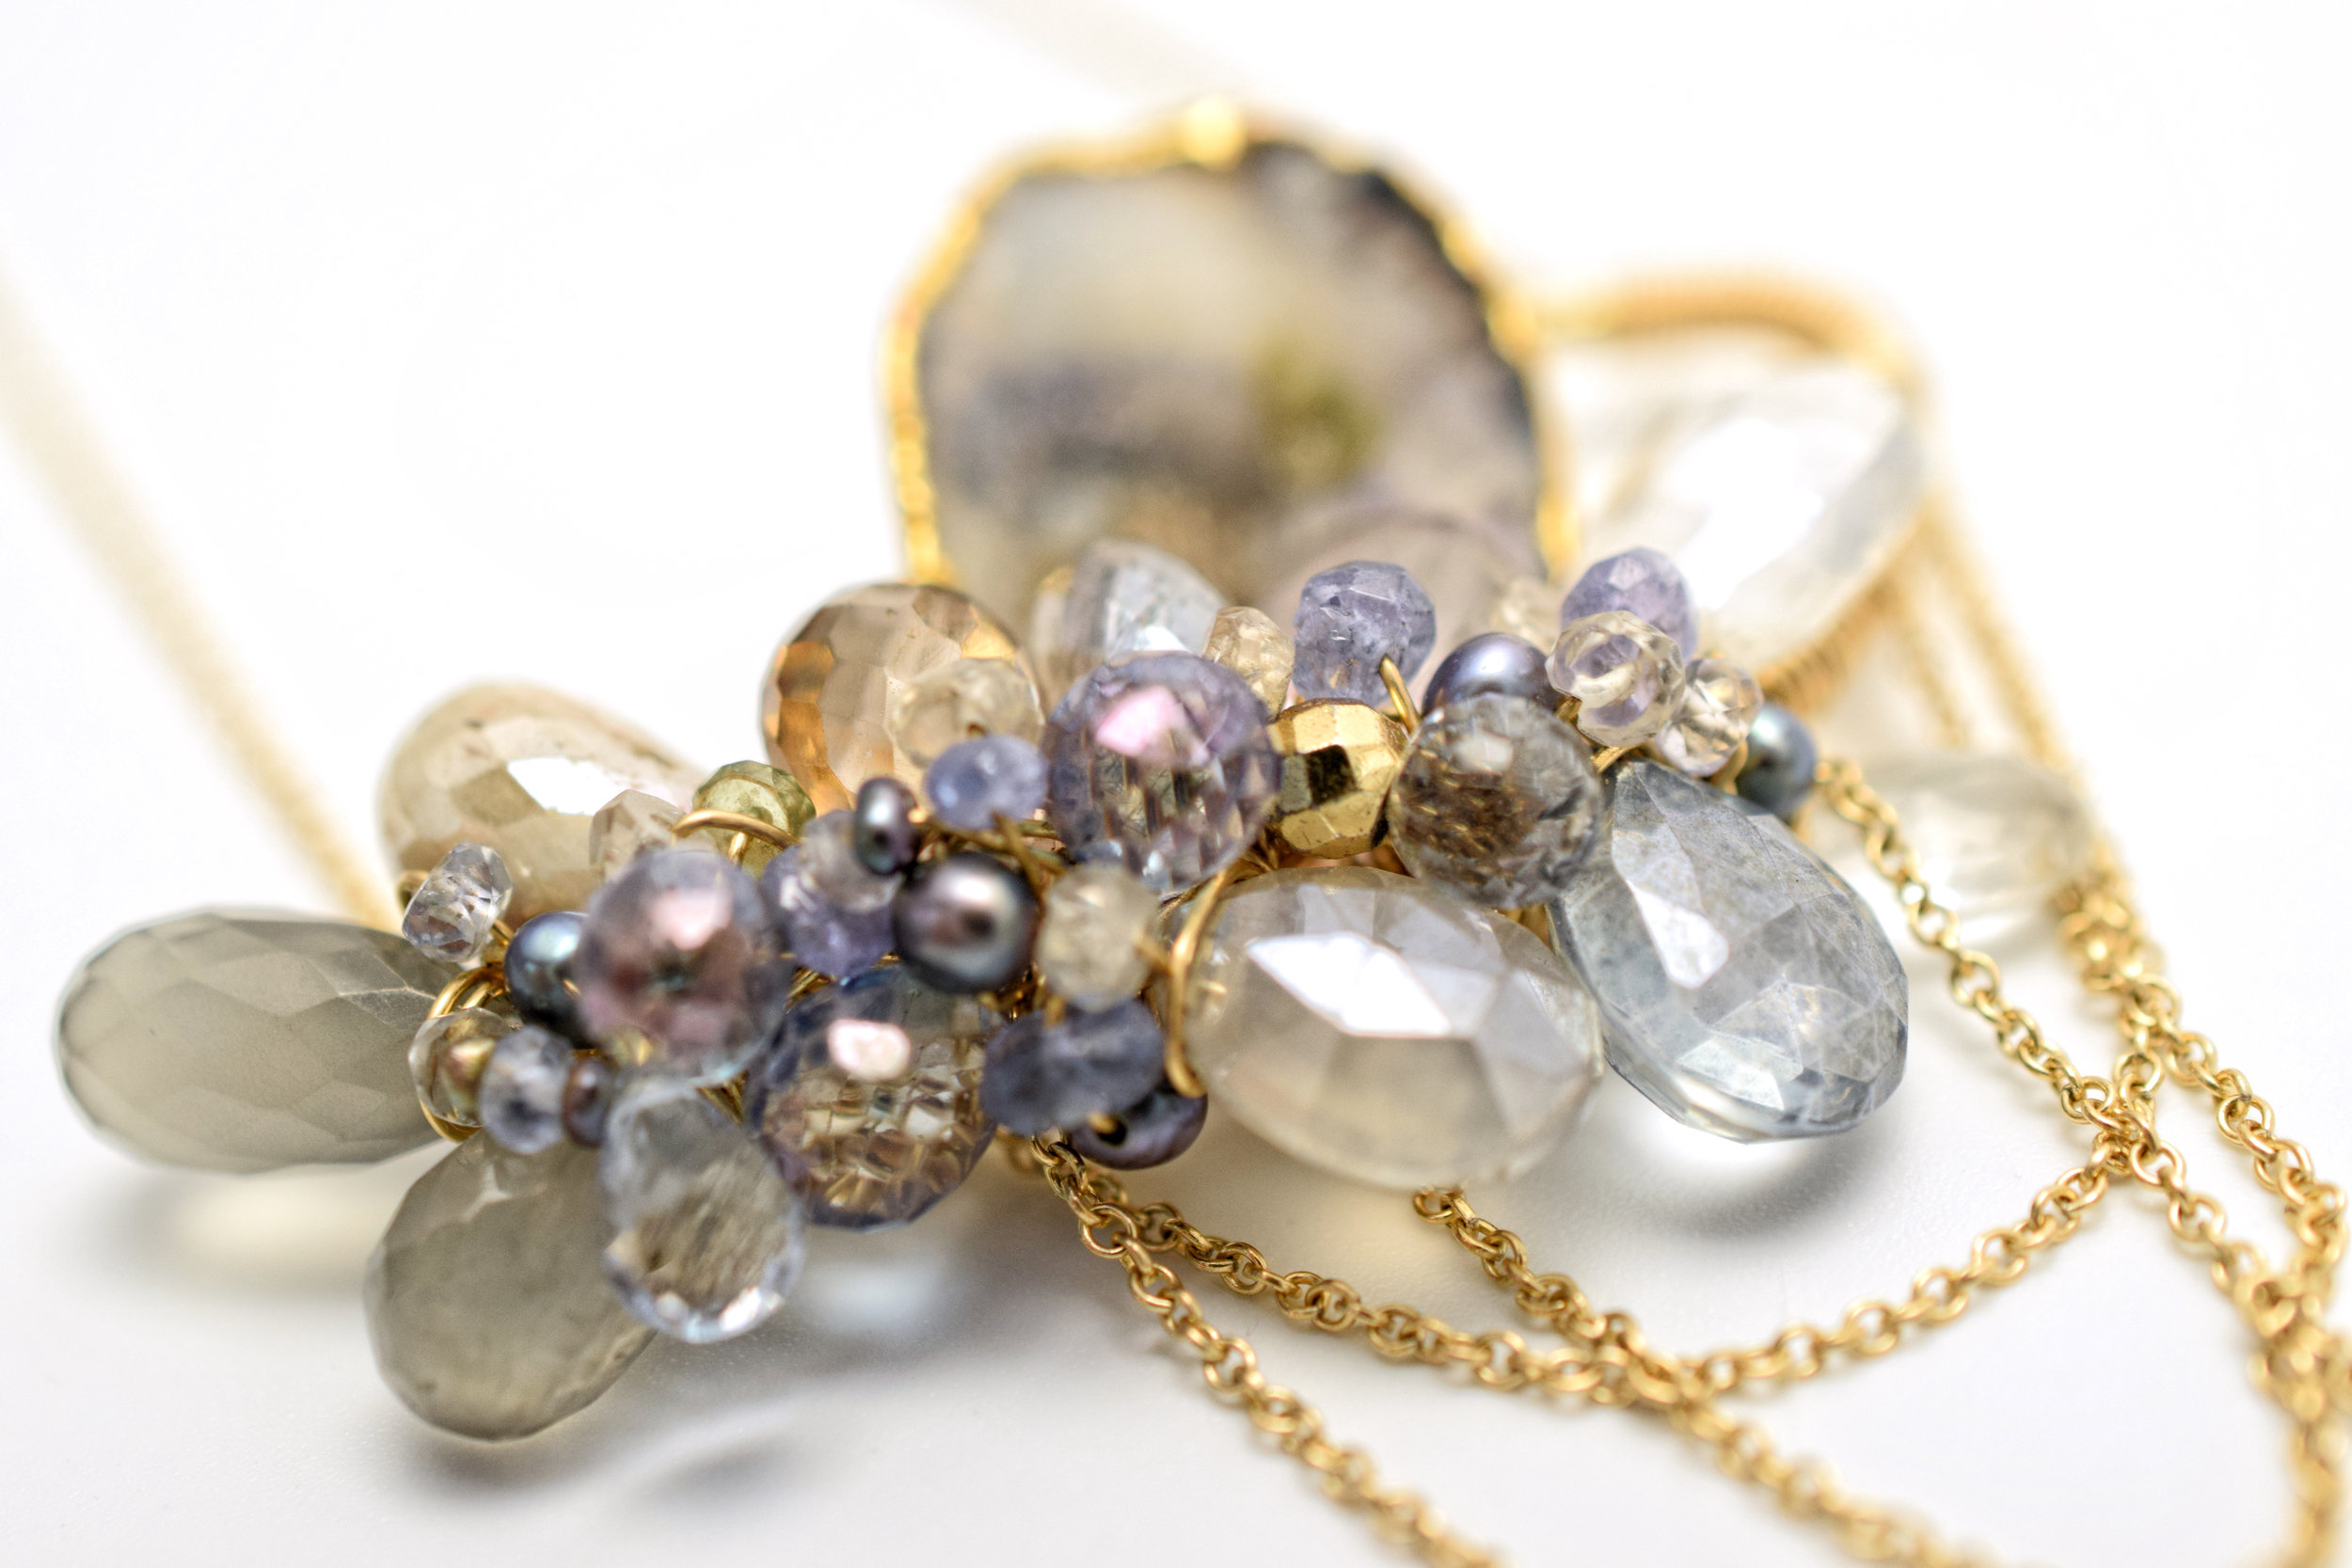 gemstone and druzy pendant necklace